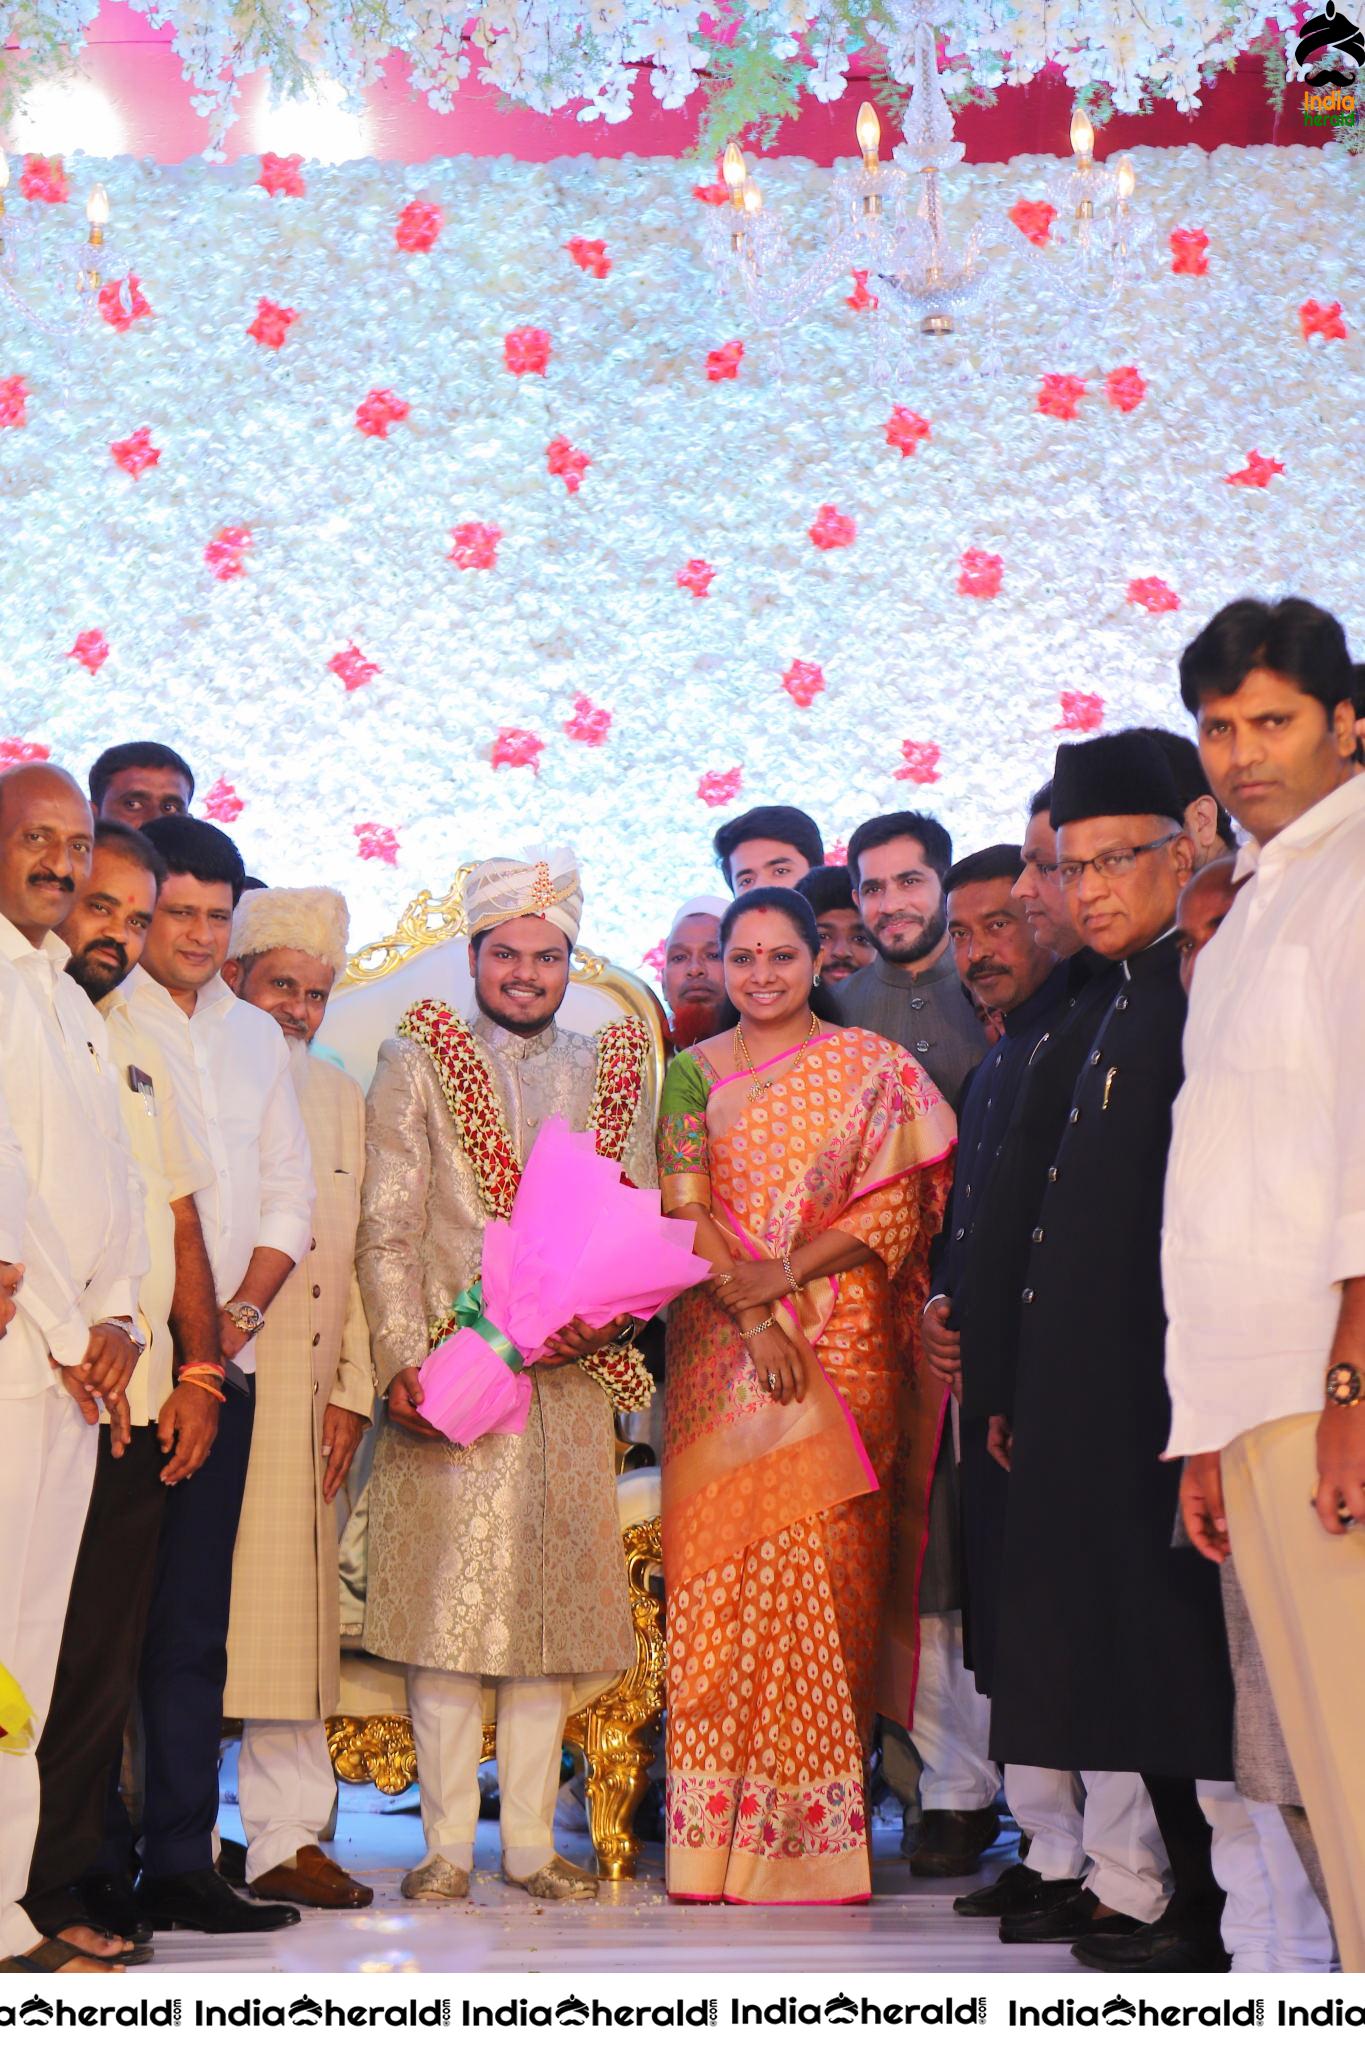 Ahmed Abhdul Taqveem and Zoha Mujeeb Wedding Ceremony at Kings Kohinoor Mehdipatnam Set 3